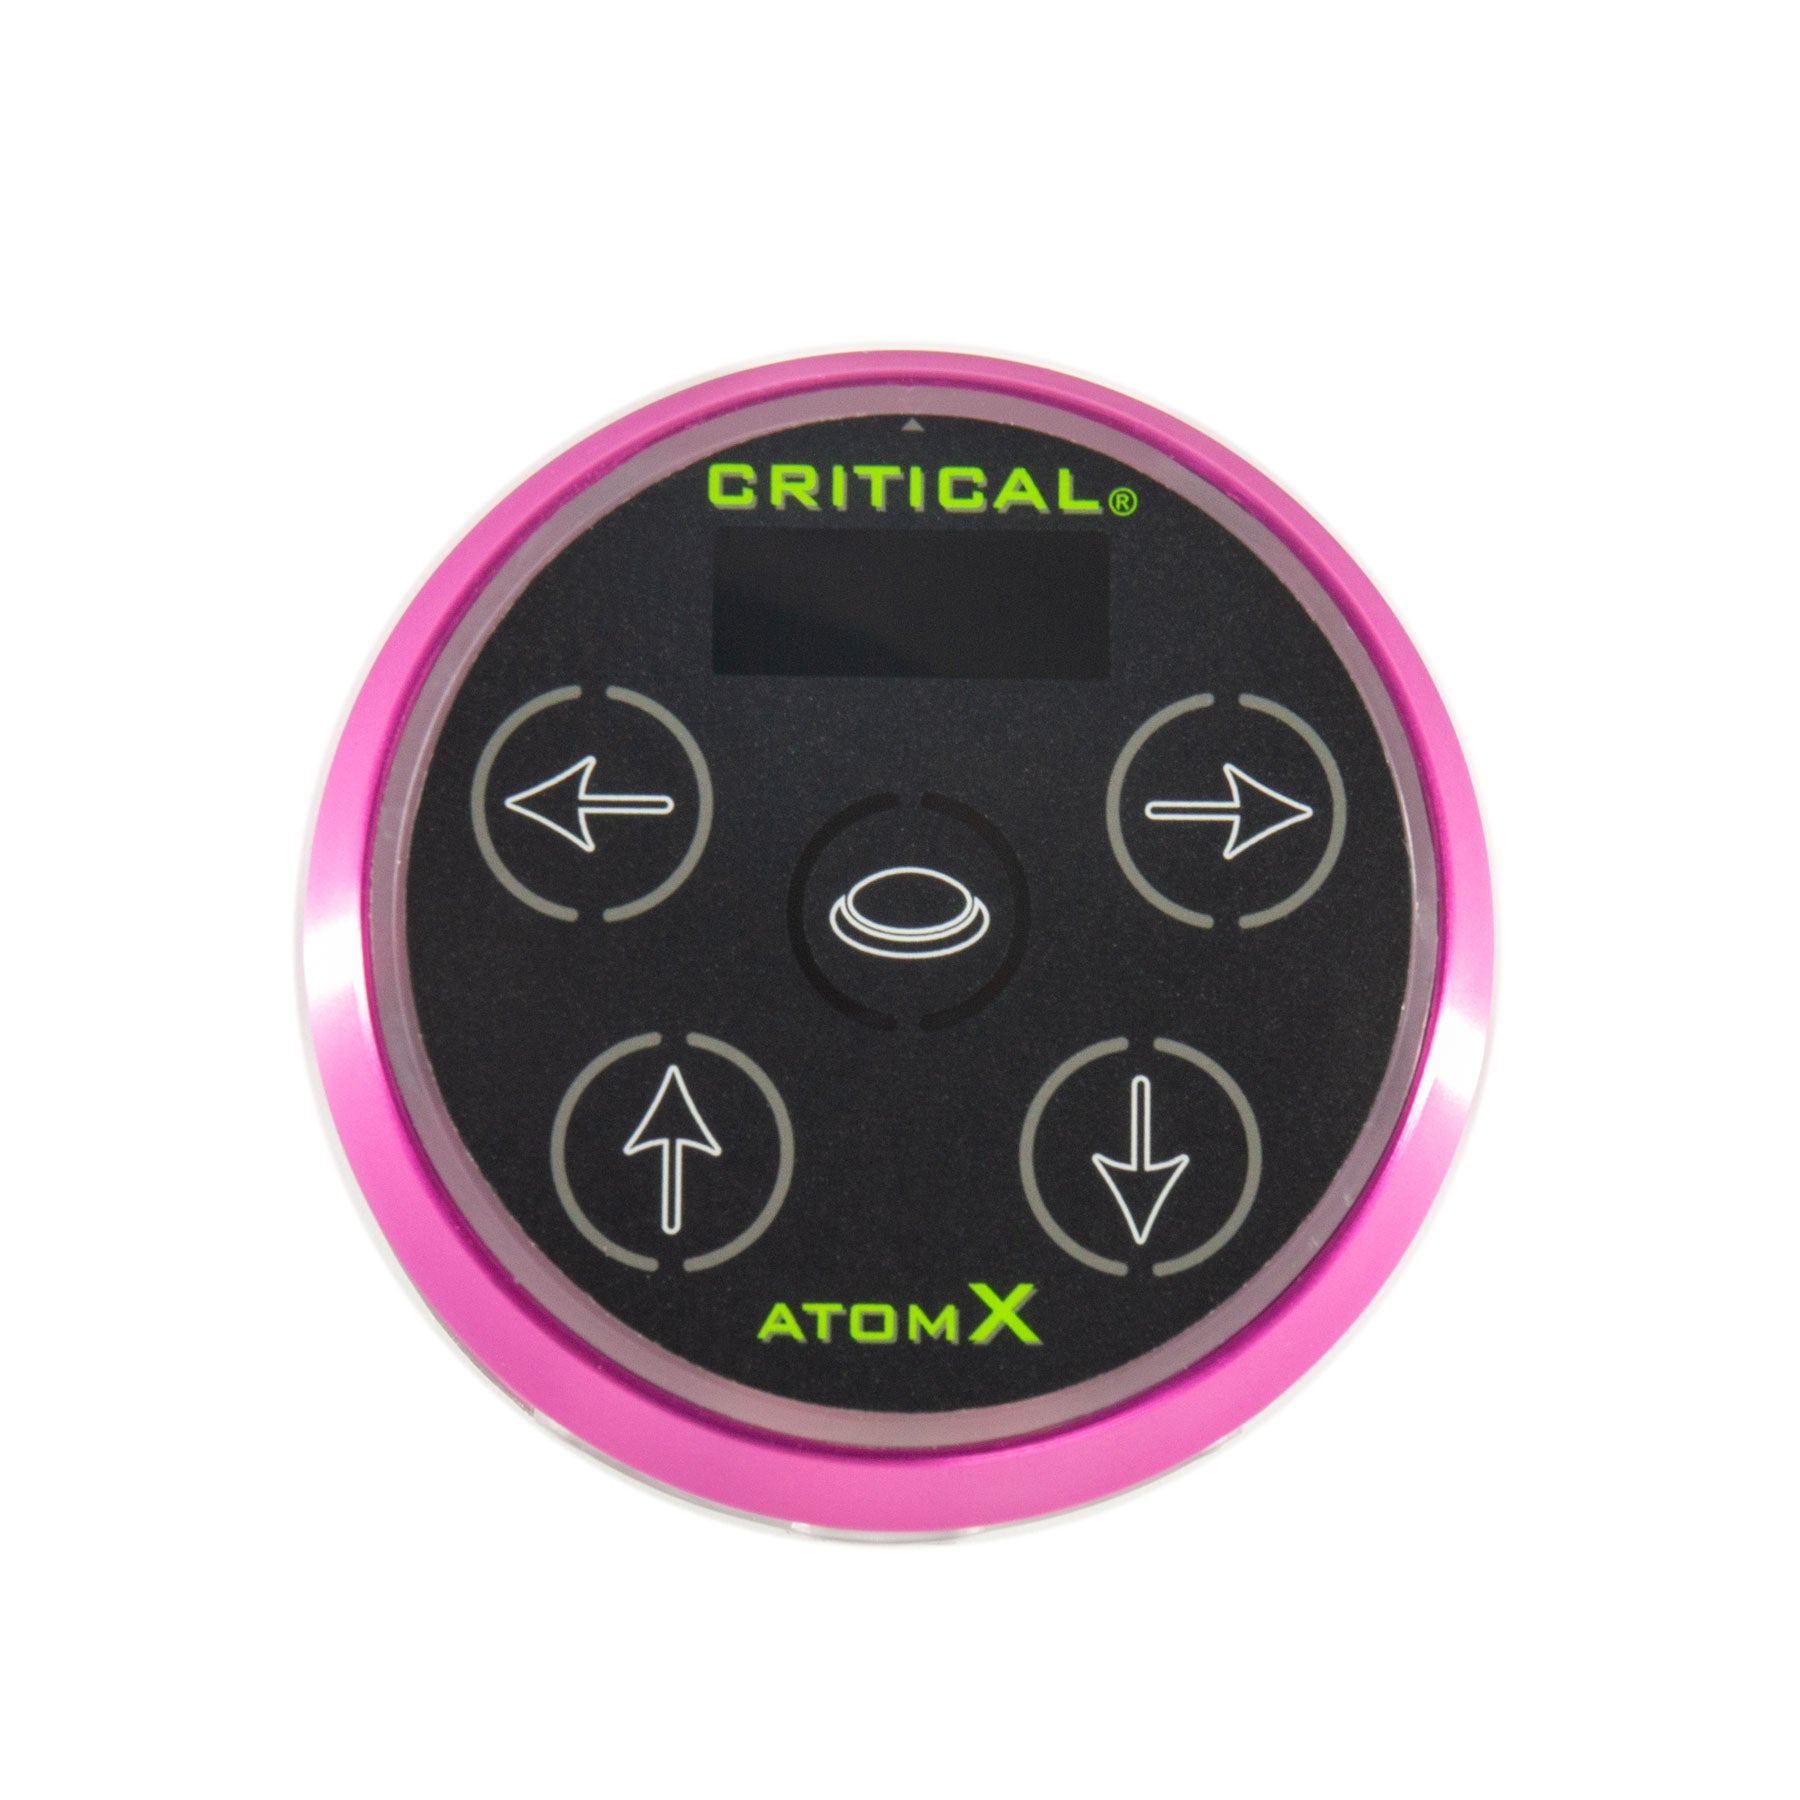 Critical Atom X Power Supply (Pink)